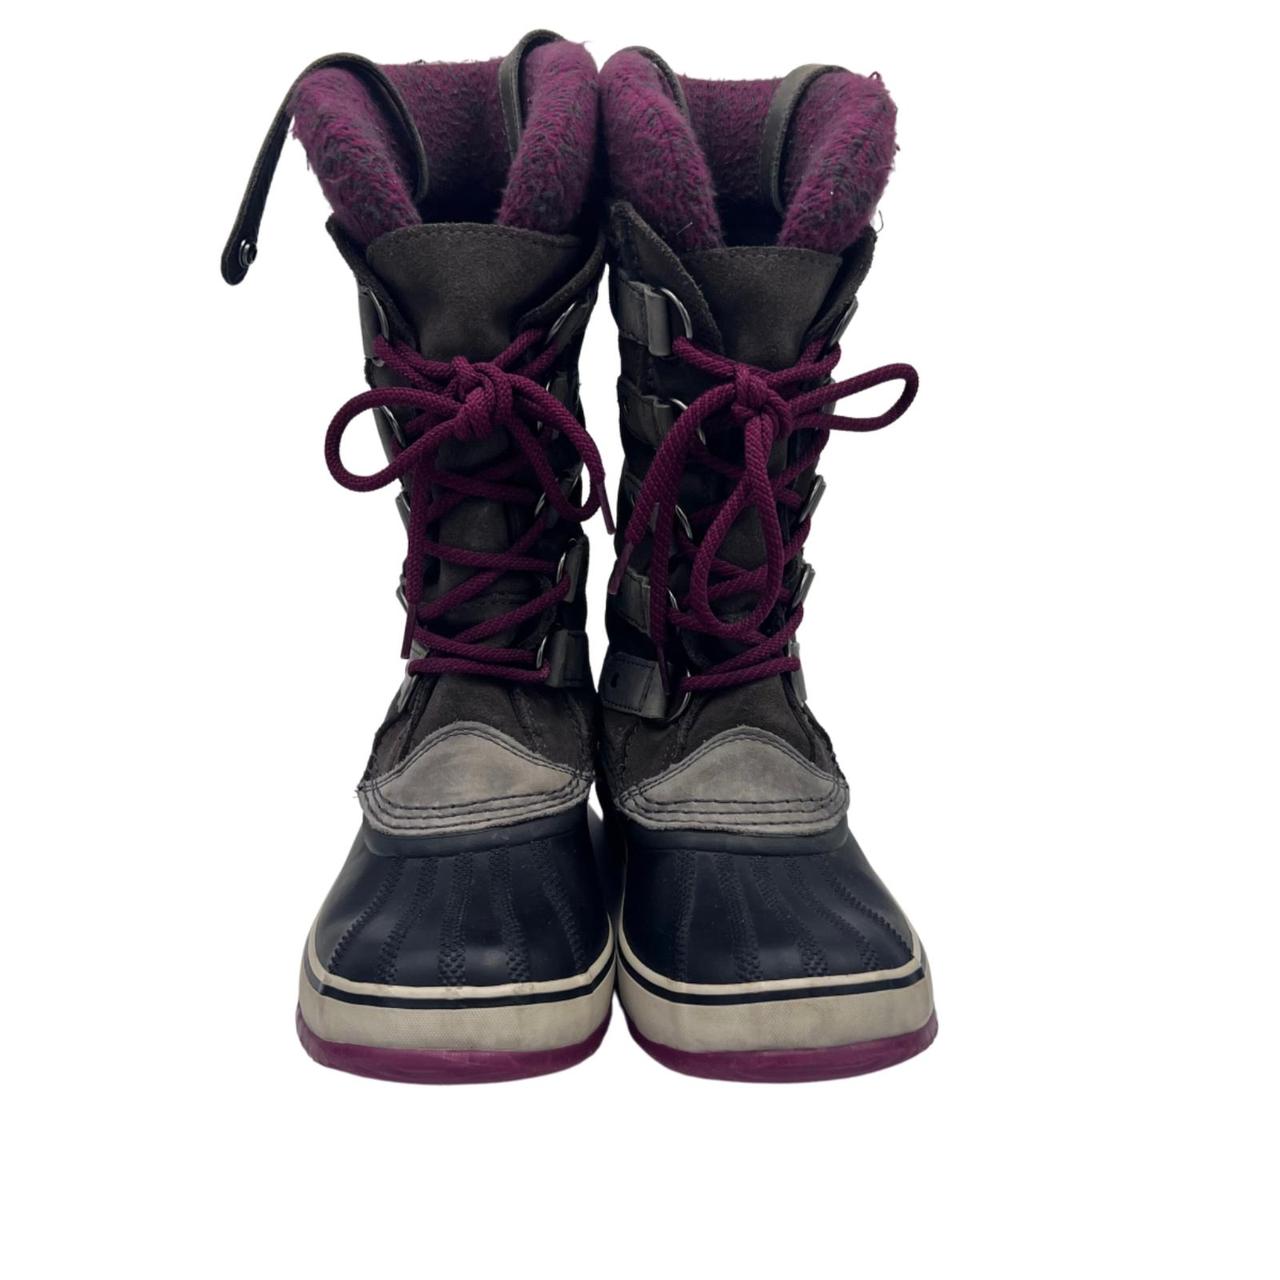 Sorel Women's Grey and Purple Boots (5)